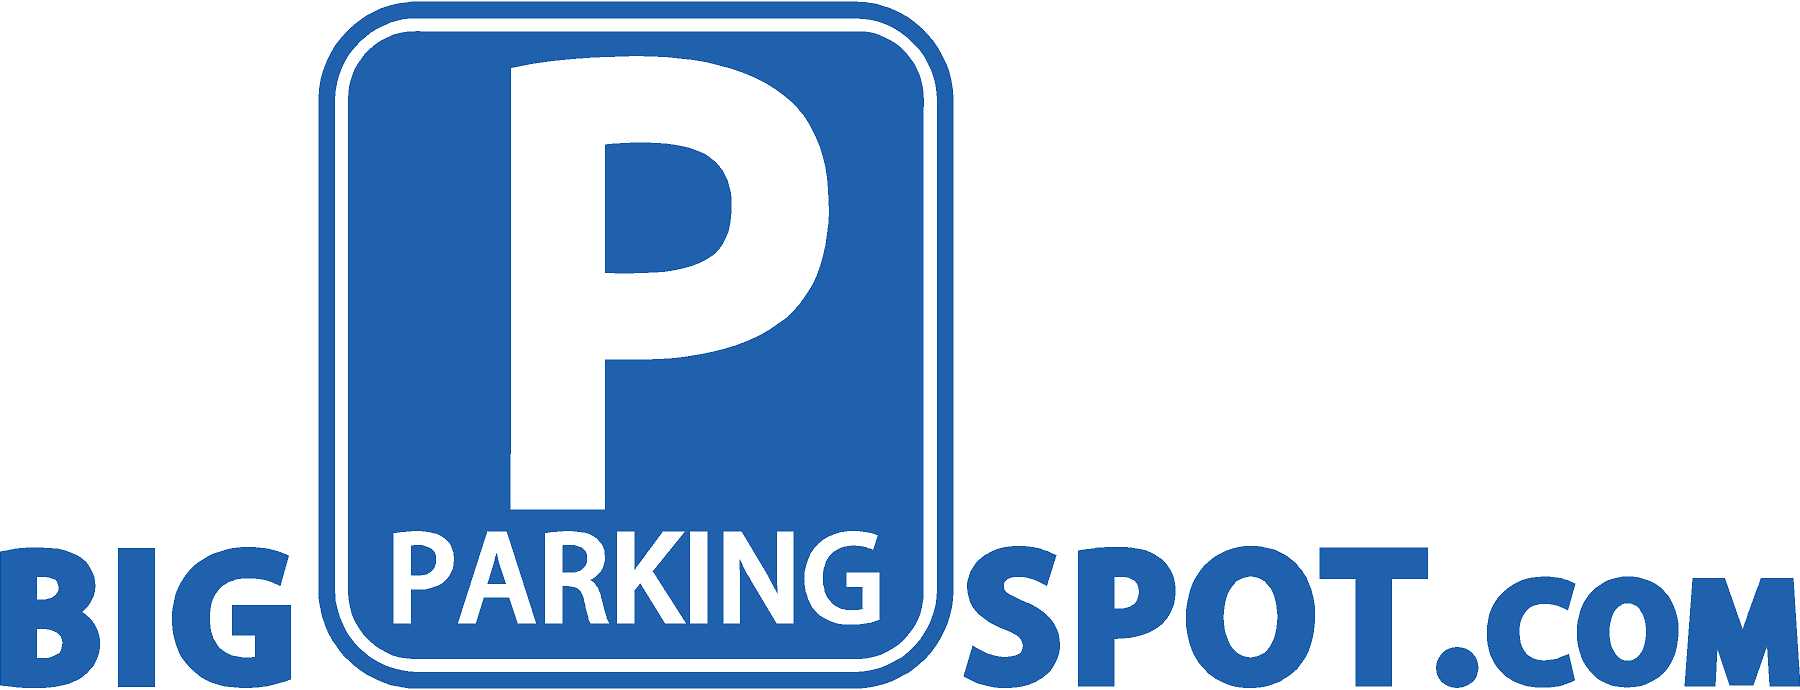 Big Parking Spot